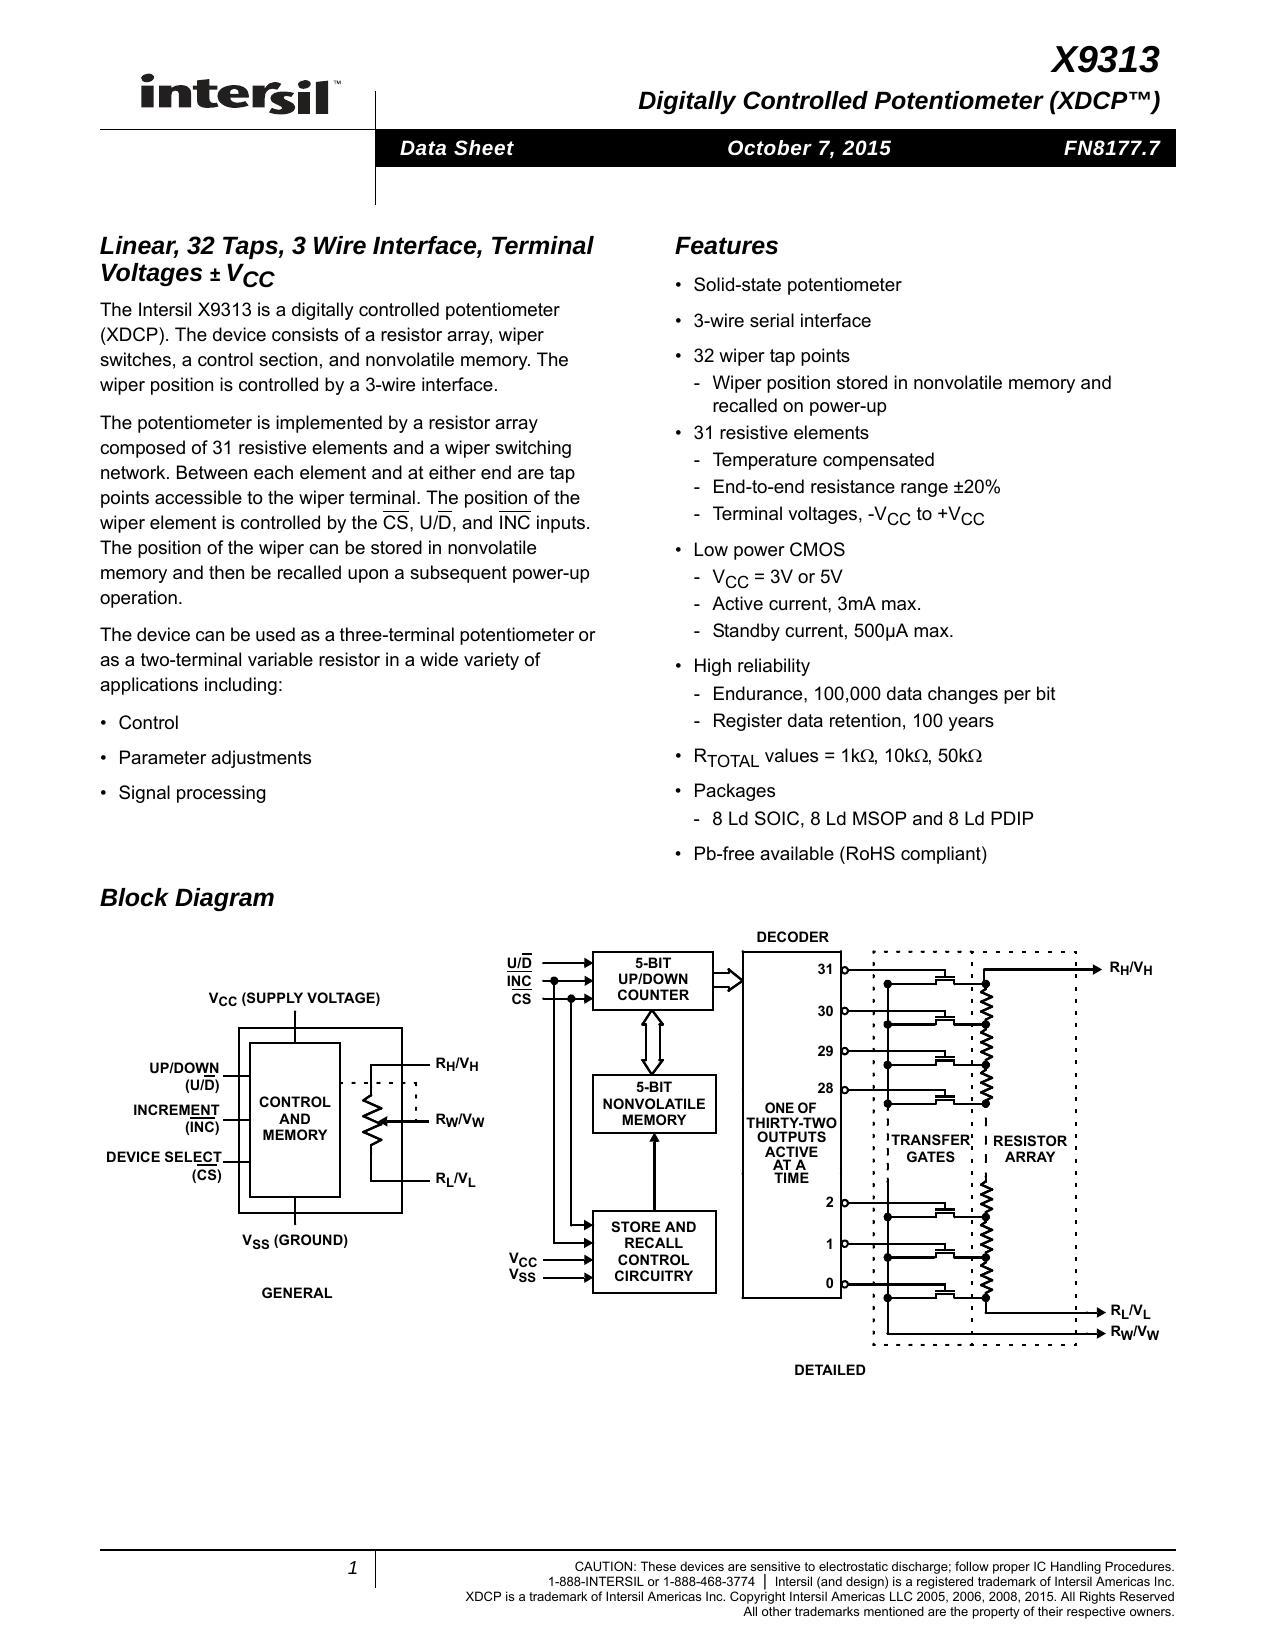 x9313-digitally-controlled-potentiometer-xdcp.pdf